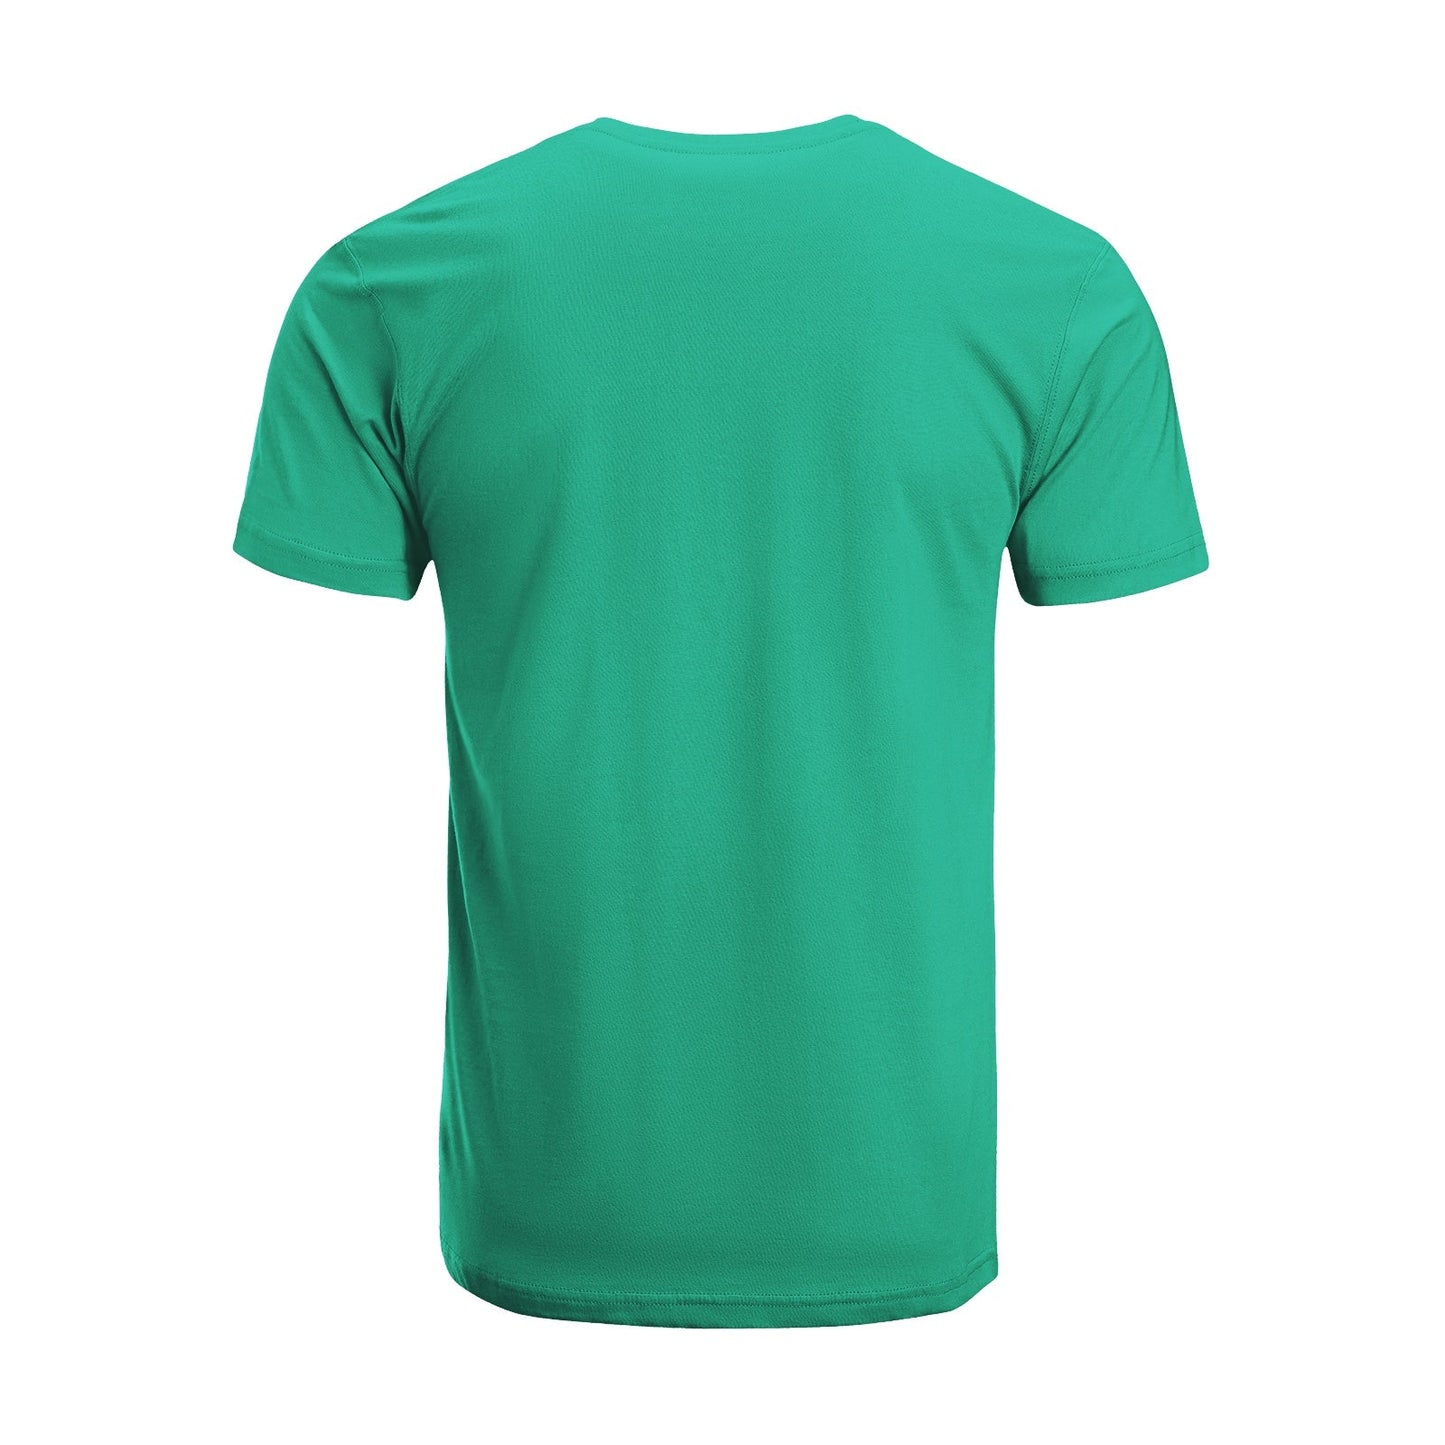 Unisex Short Sleeve Crew Neck Cotton Jersey T-Shirt VEGAN 23